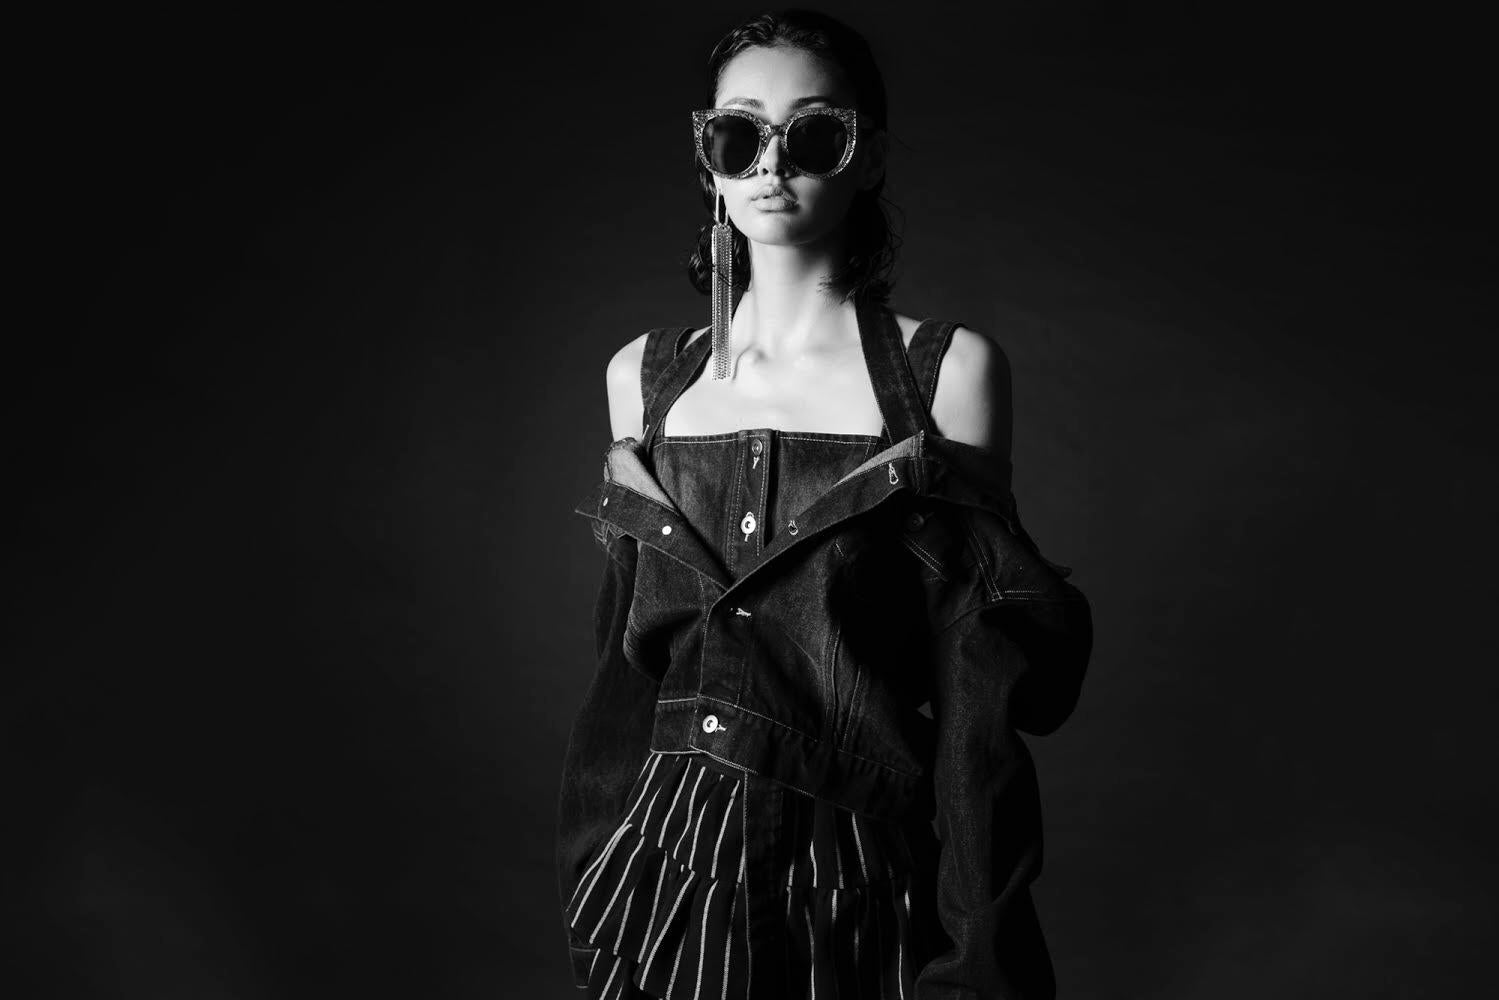 ARISSA X REVÉ by RENÉ Launch at Singapore Fashion Week 2017